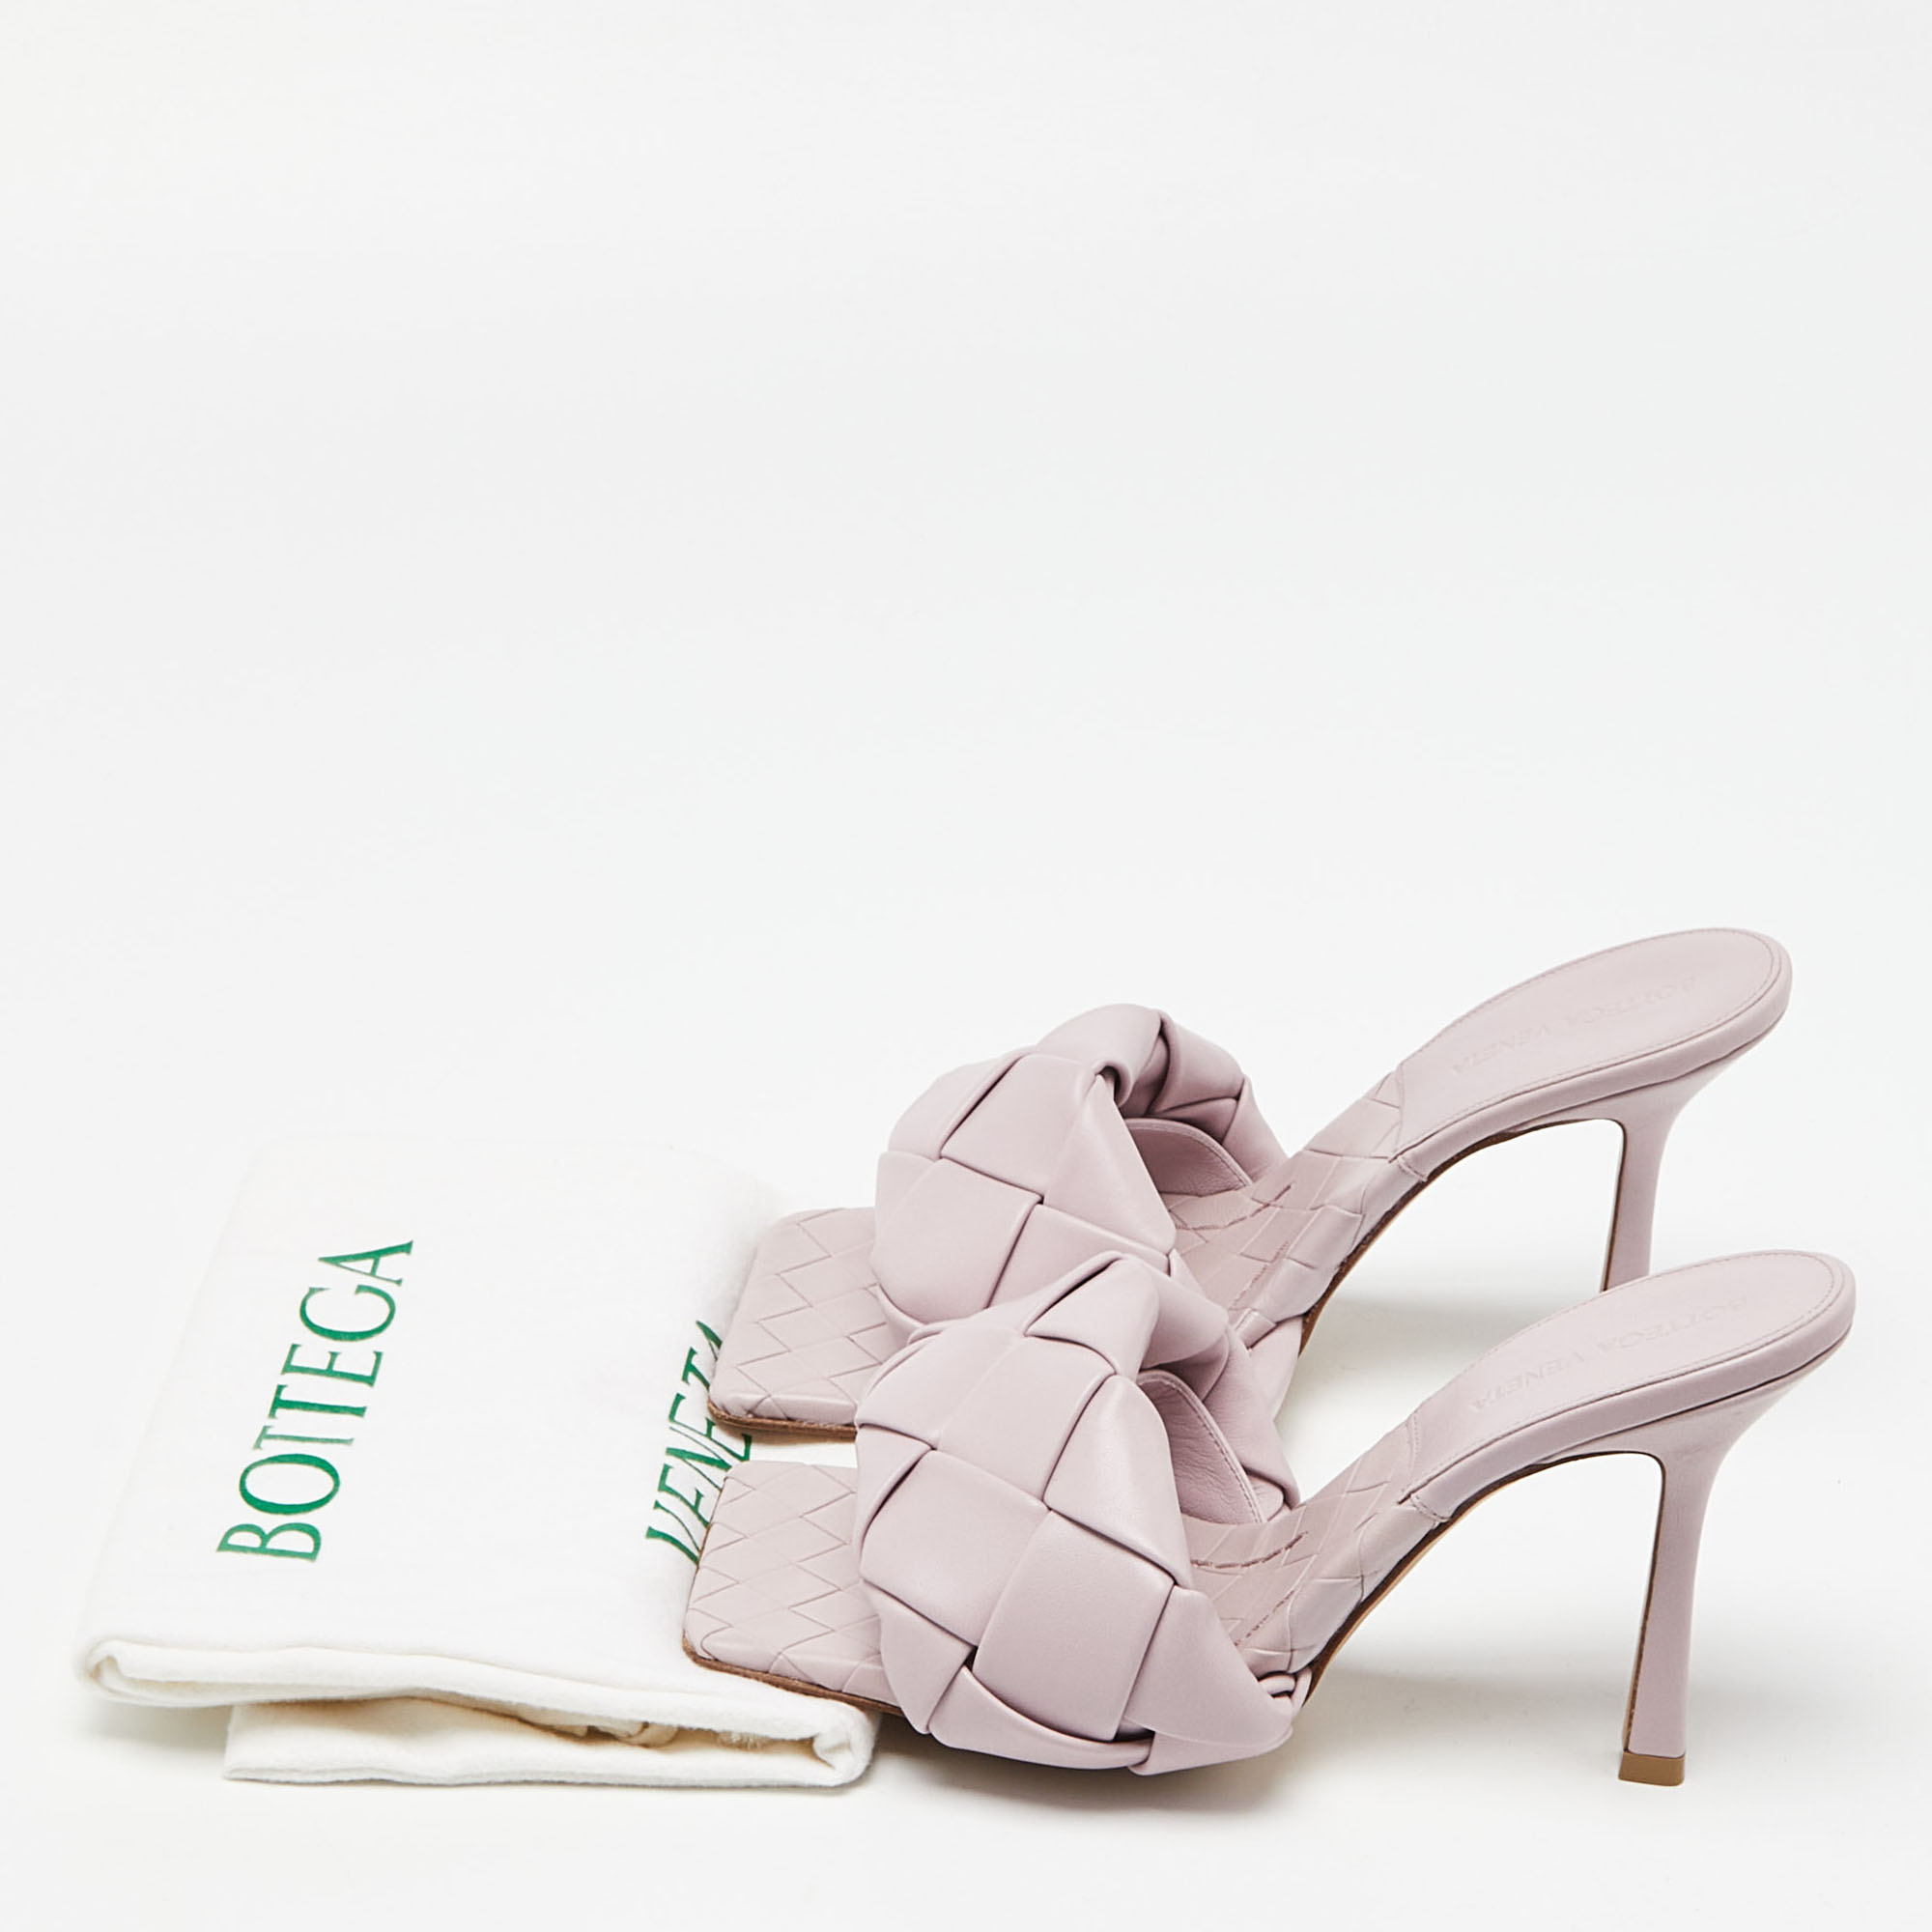 Bottega Veneta Lilac Intrecciato Leather Lido Slide Sandals Size 38